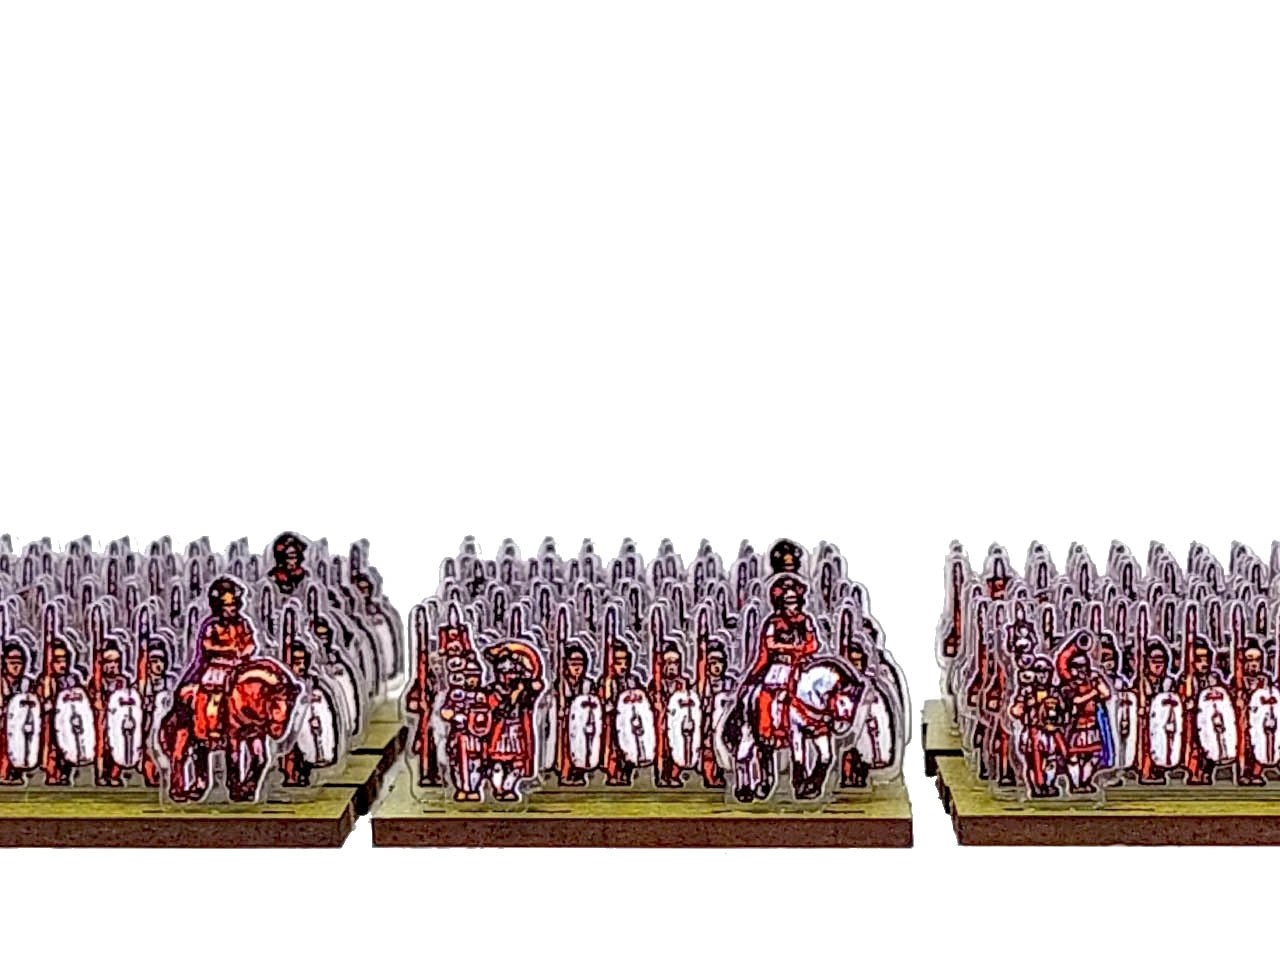 Late Republican Roman Infantry 2